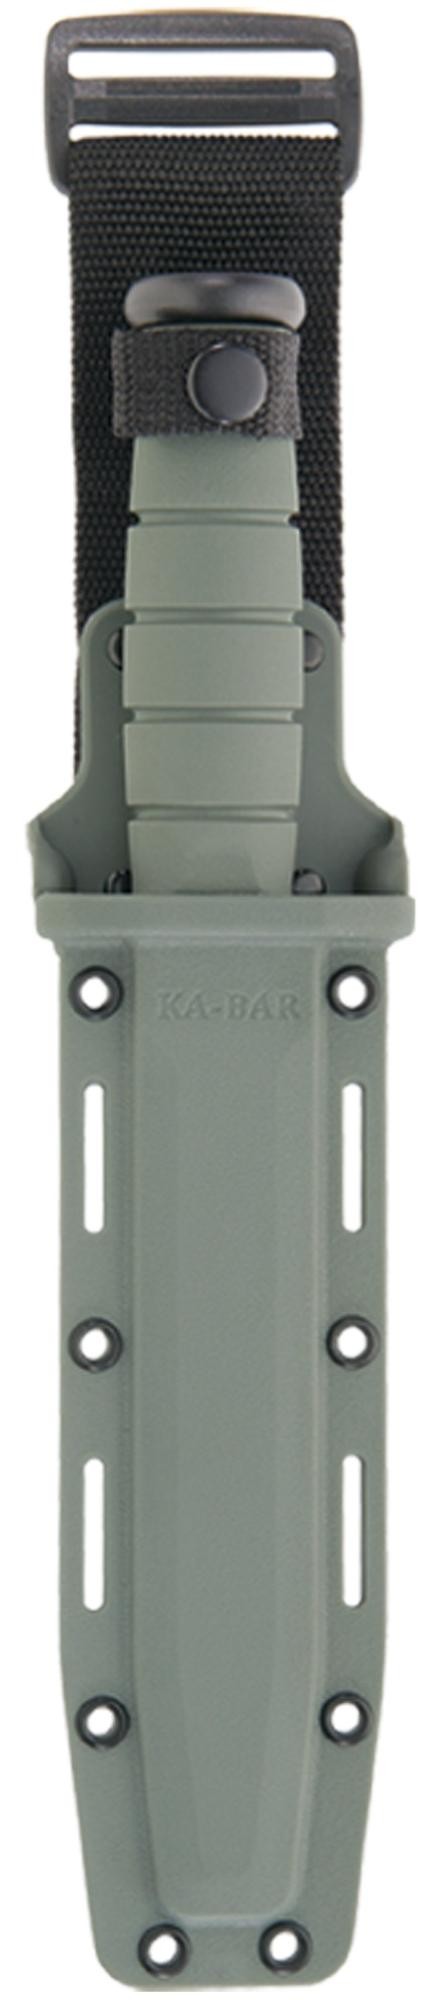 KA-BAR® Full Size with Foliage Green Handle & Hard Plastic Sheath (5011)